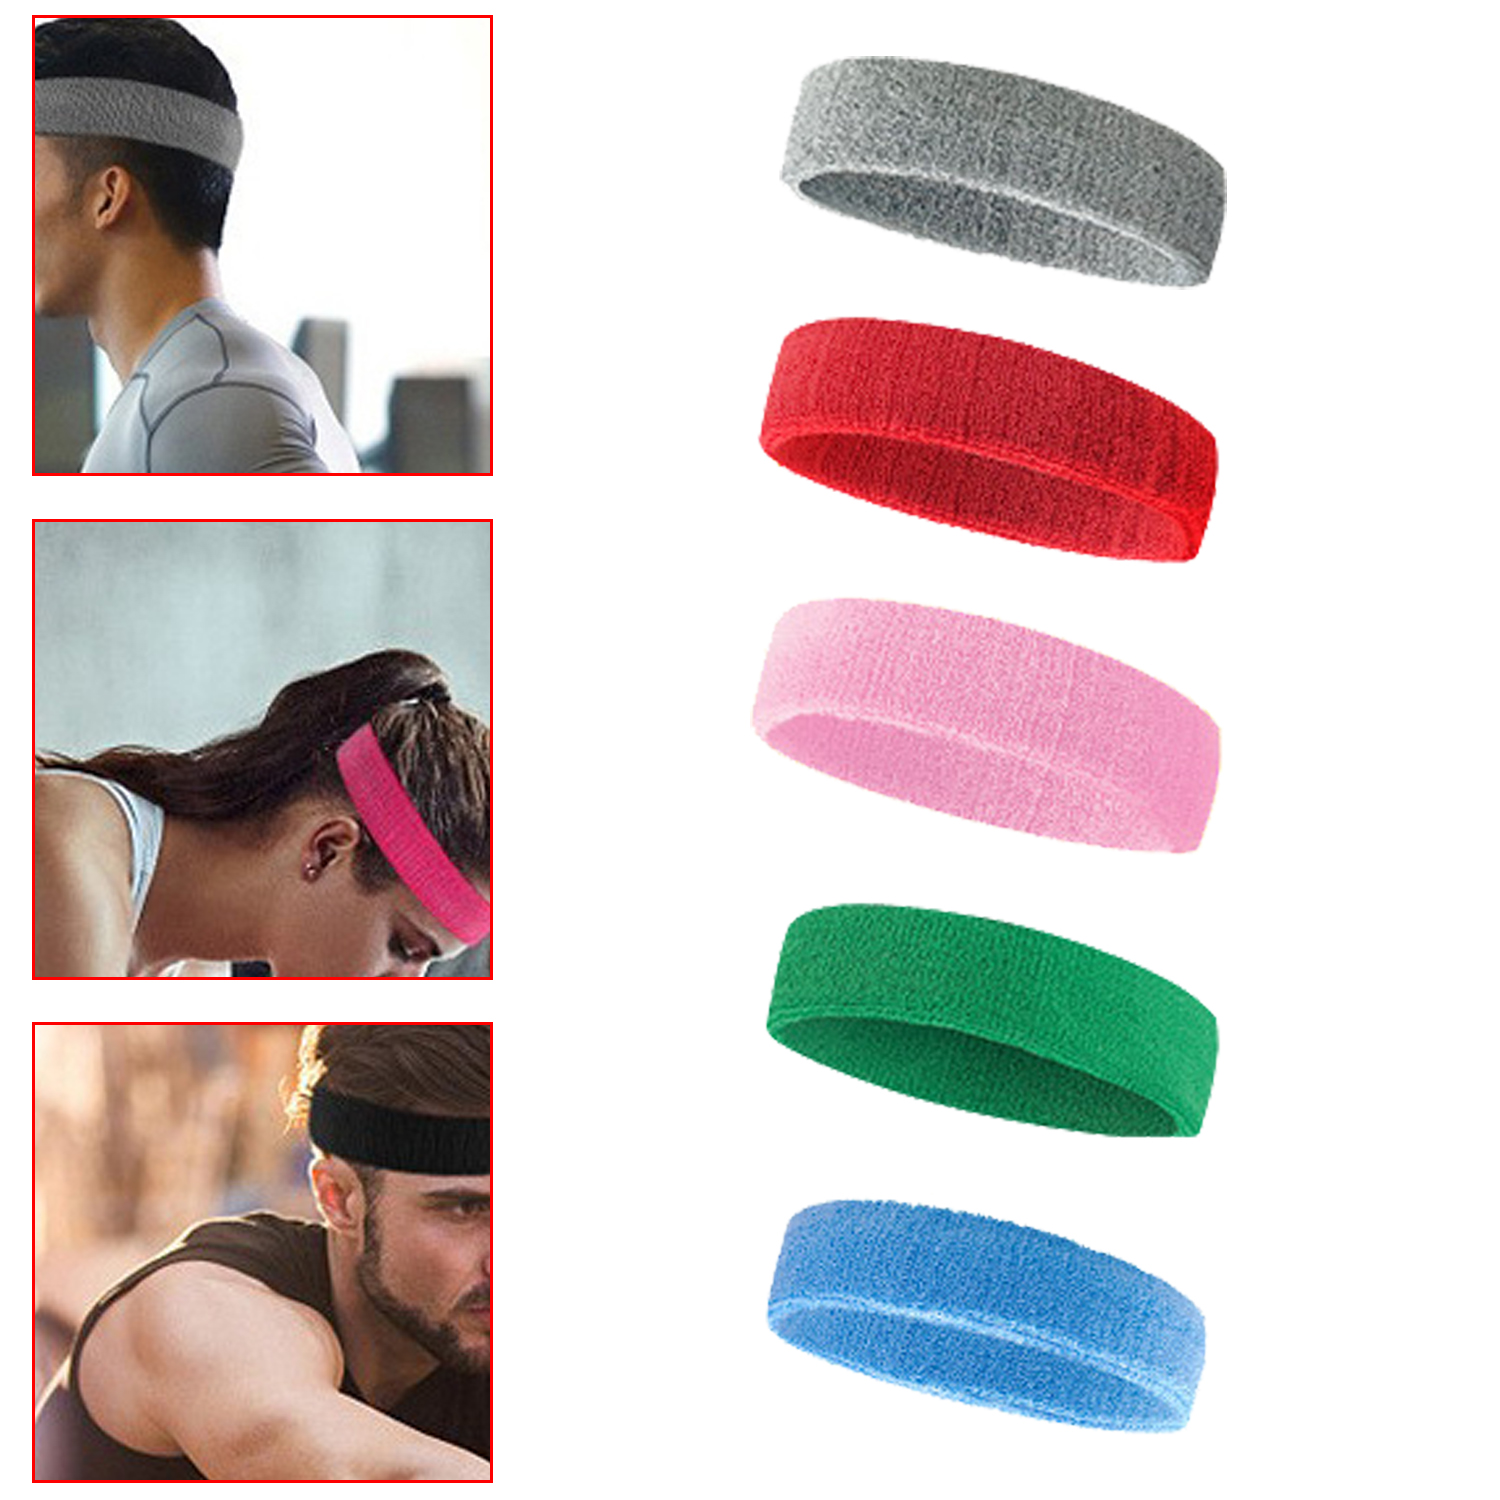 Head Workout Sweatband Cotton Sweatband Yoga Gym Stretch Head Band For Sport Elasticity Sweat Bands Sports Safety Sweatband